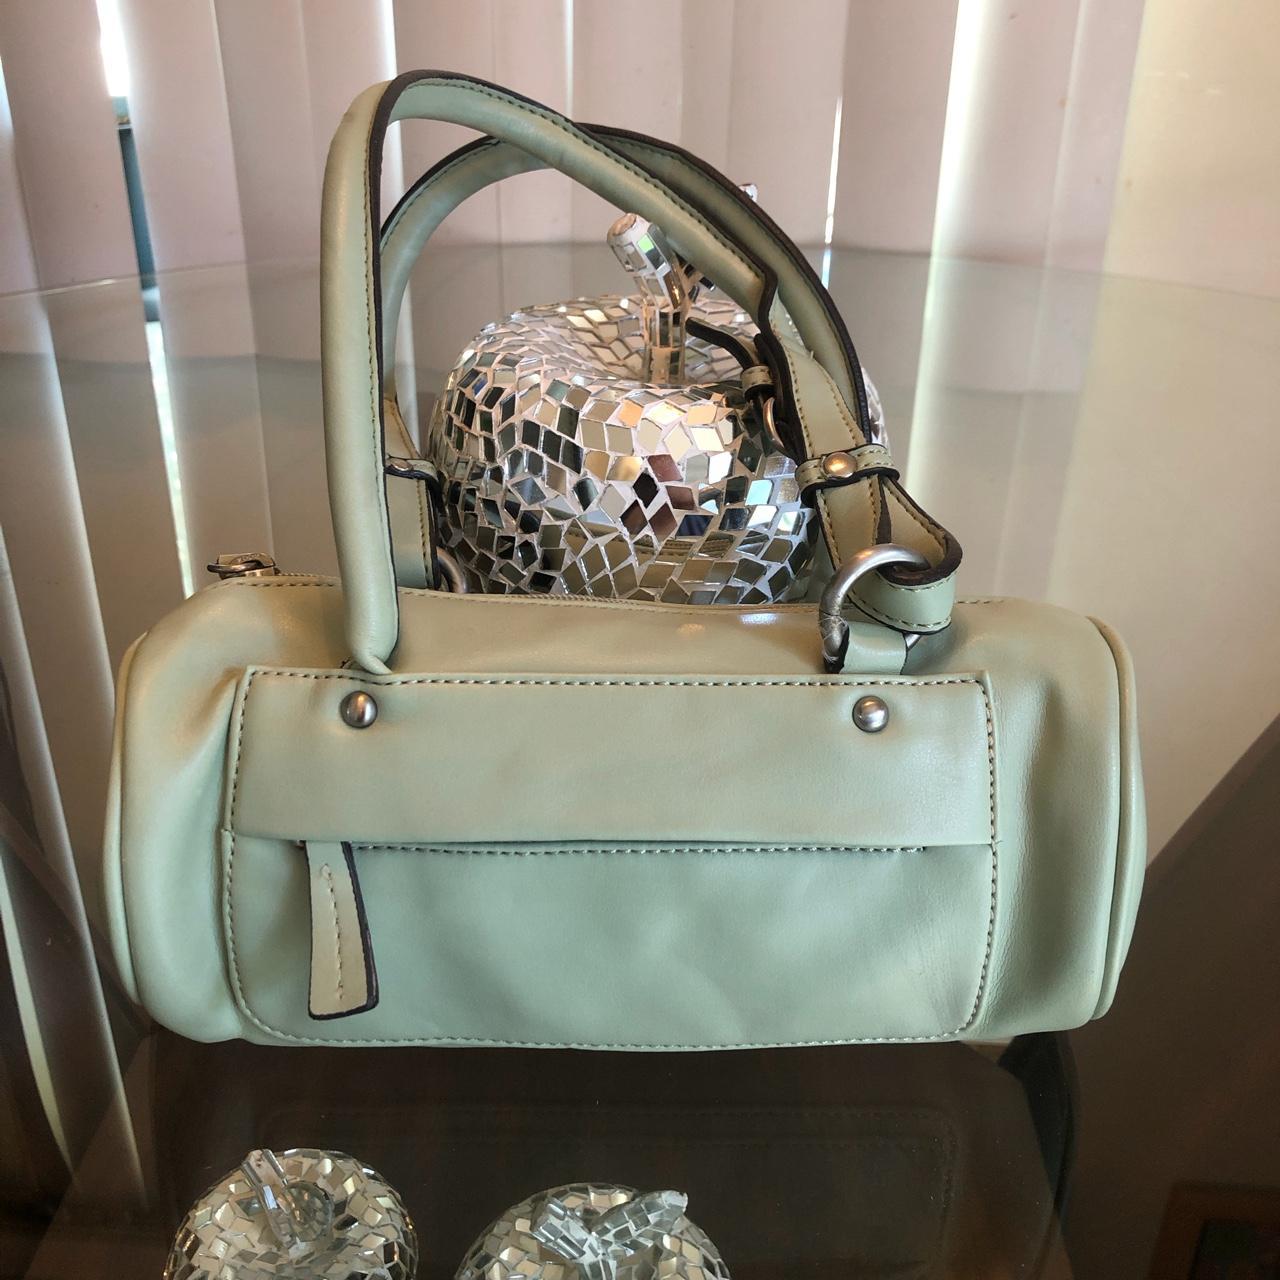 Product Image 1 - Mondani NY green handbag 
#handbags
#bags
#purse
#greenbag
#y2kbags
🖤